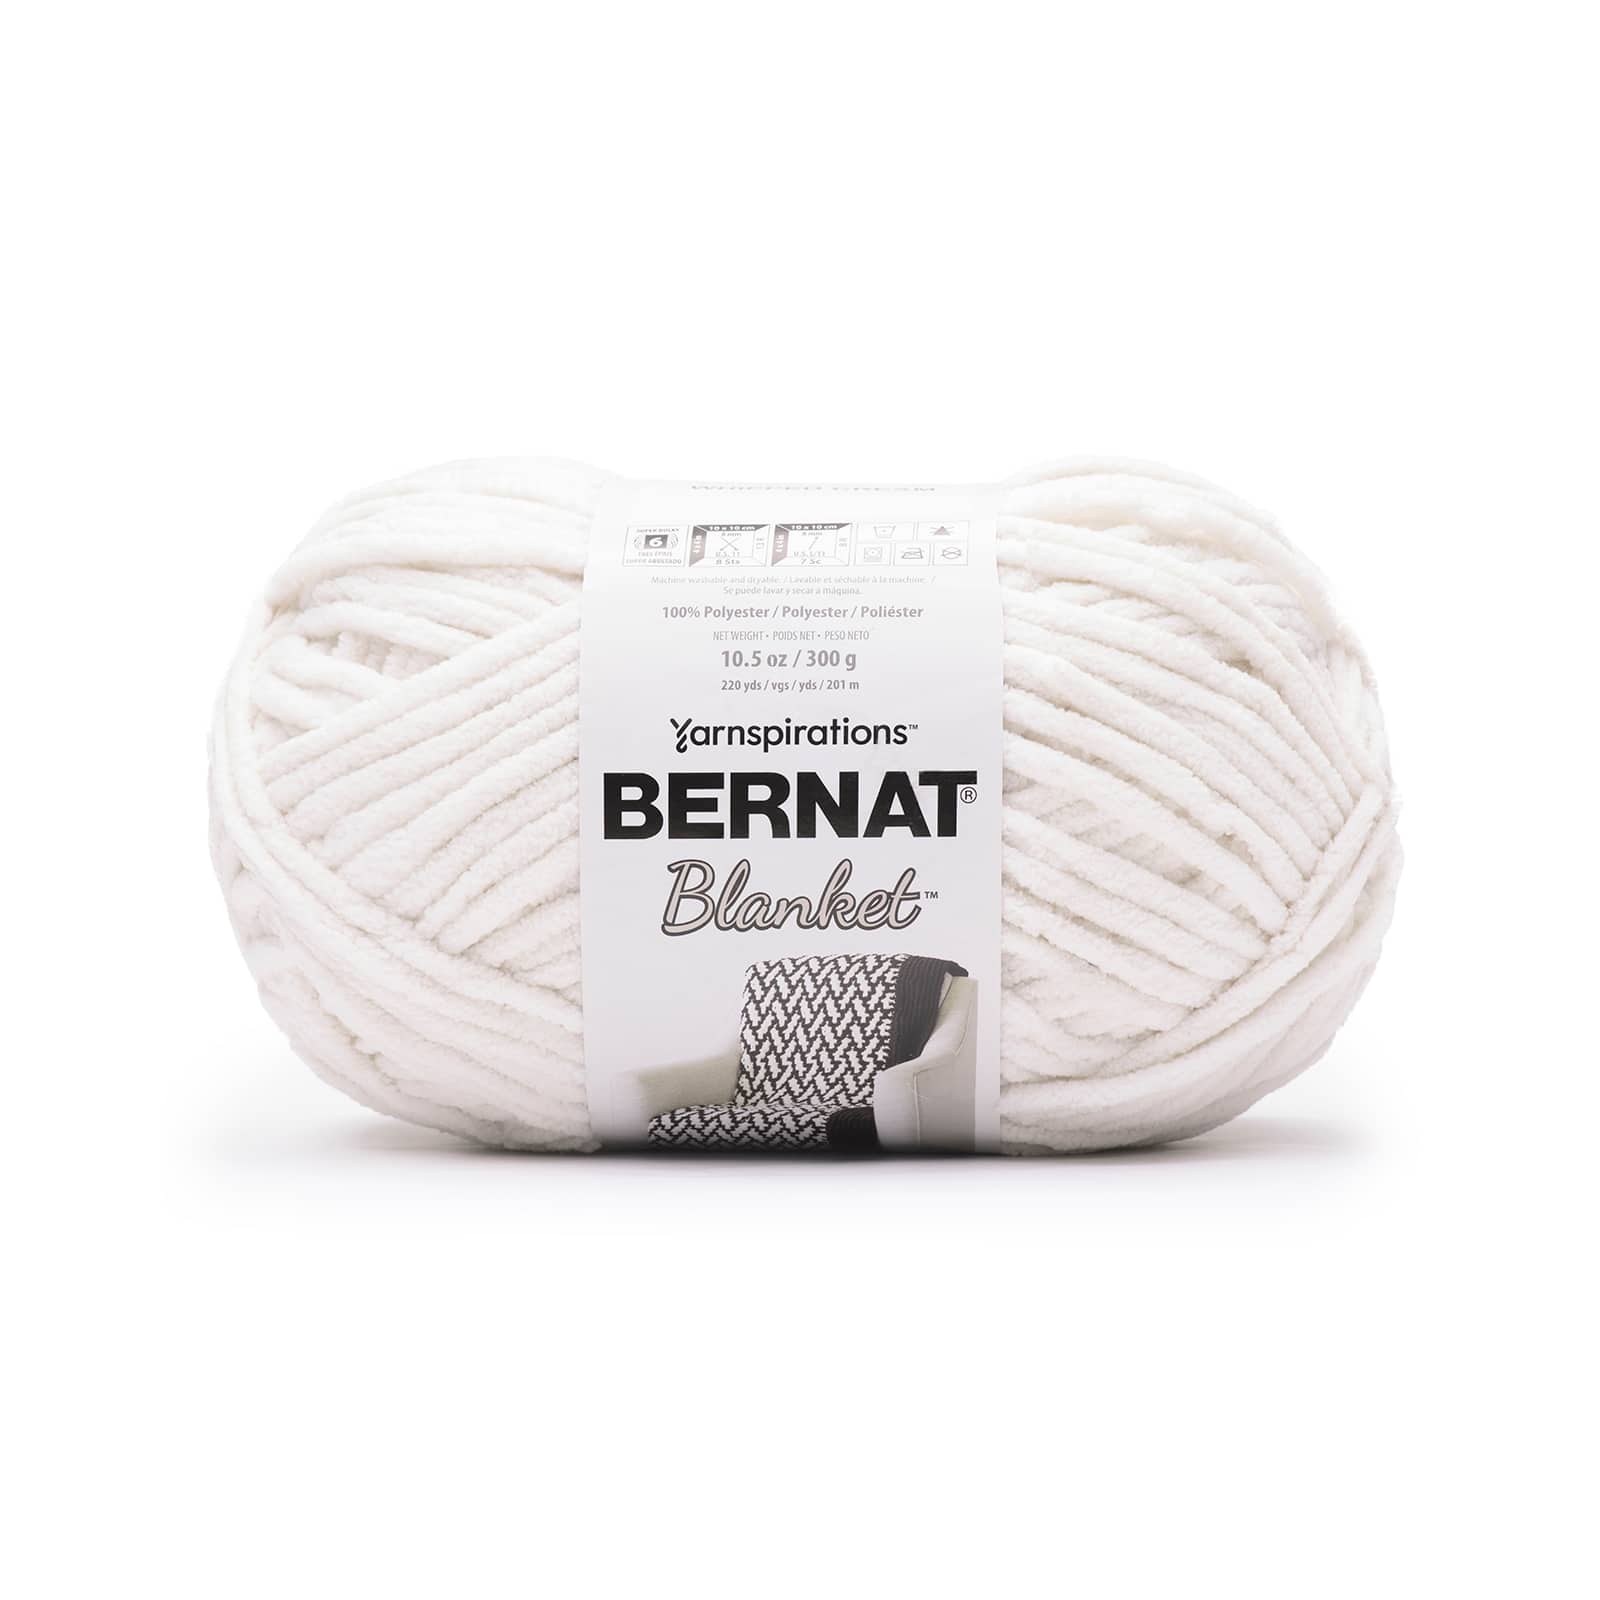 Bernat Blanket Yarn: INKWELL (black, white, & gray twist) ✒️